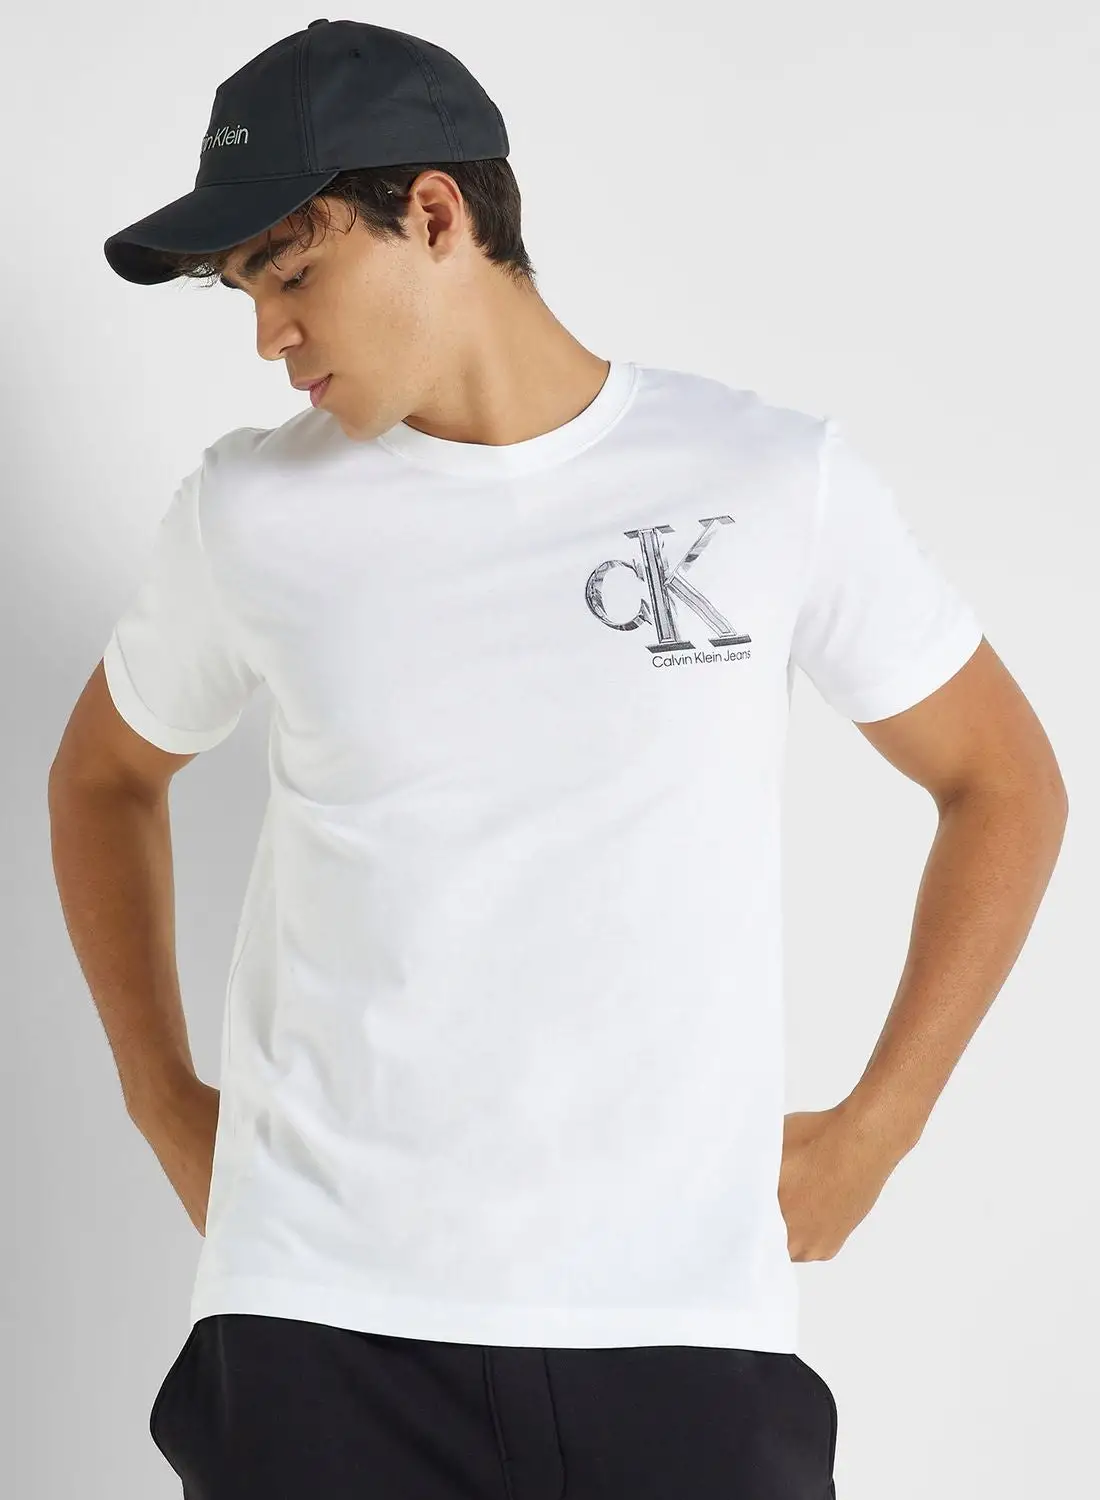 Calvin Klein Jeans Logo Crew Neck T-Shirt